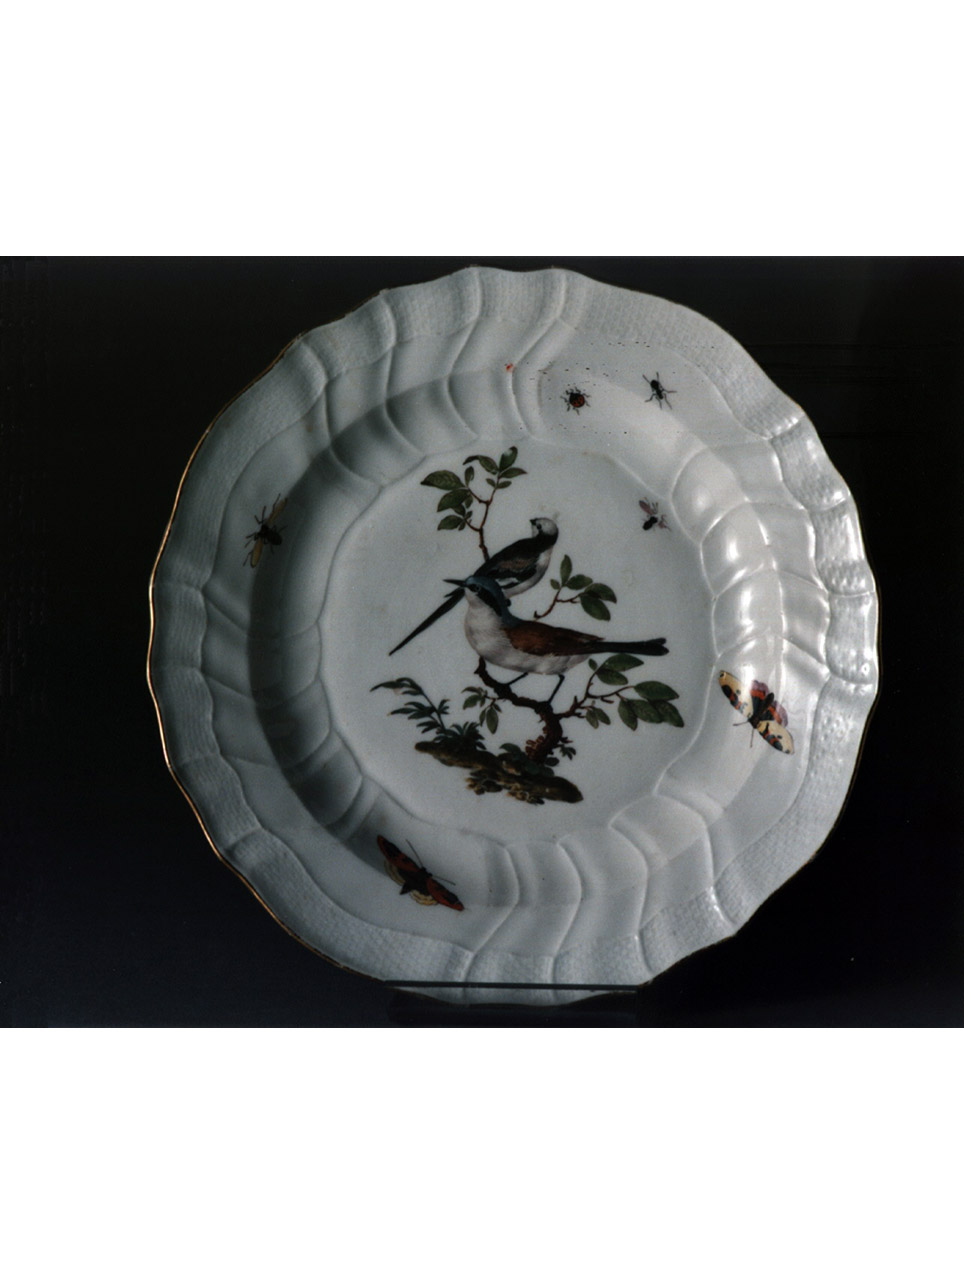 motivi decorativi vegetali e animali (piatto) - manifattura di Meissen (sec. XVIII)